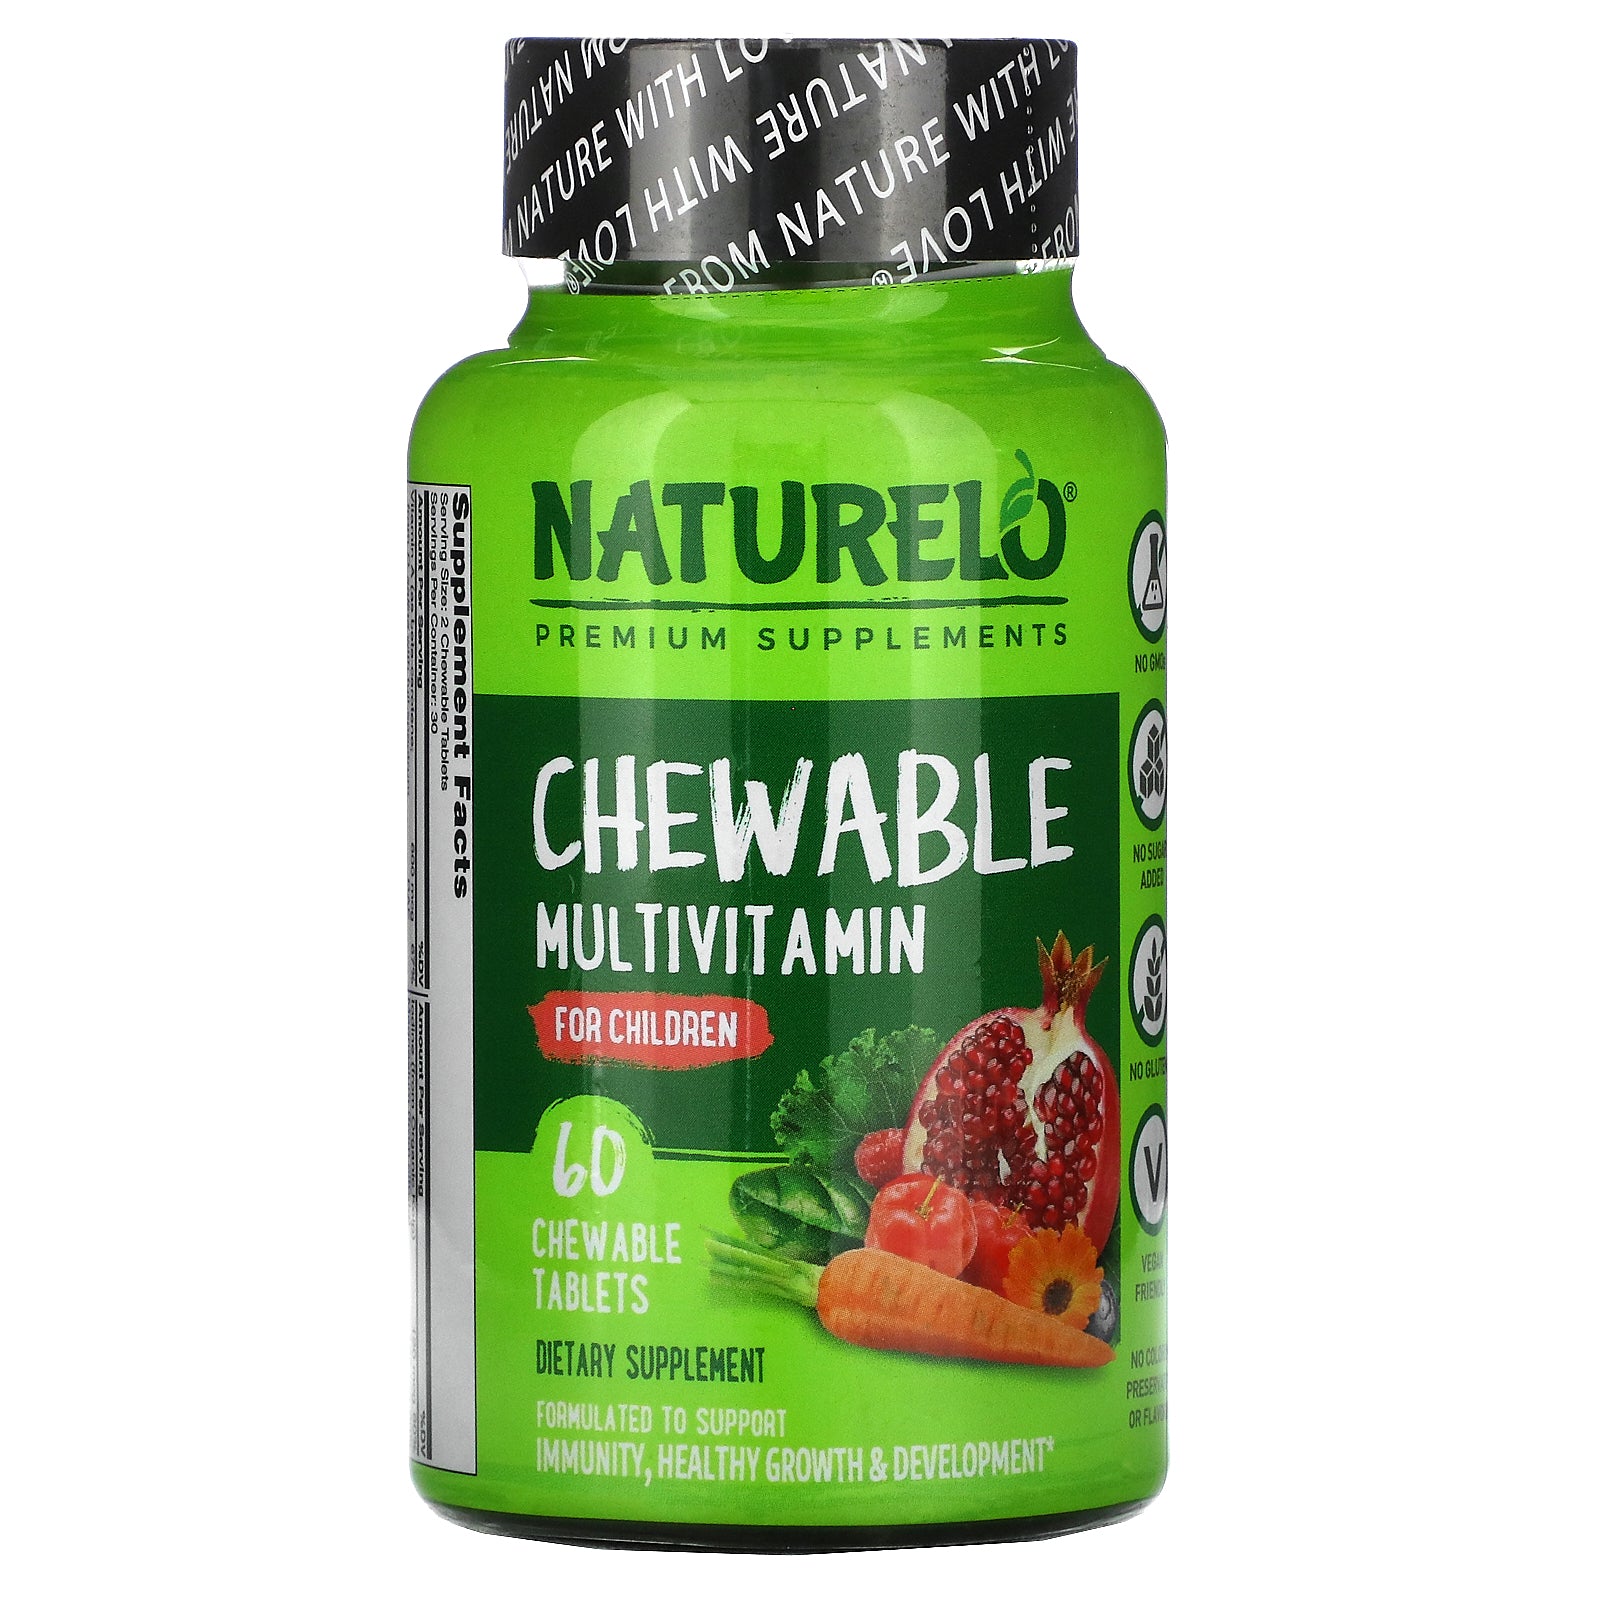 NATURELO, Chewable Multivitamin for Children, 60 Chewable Tablets